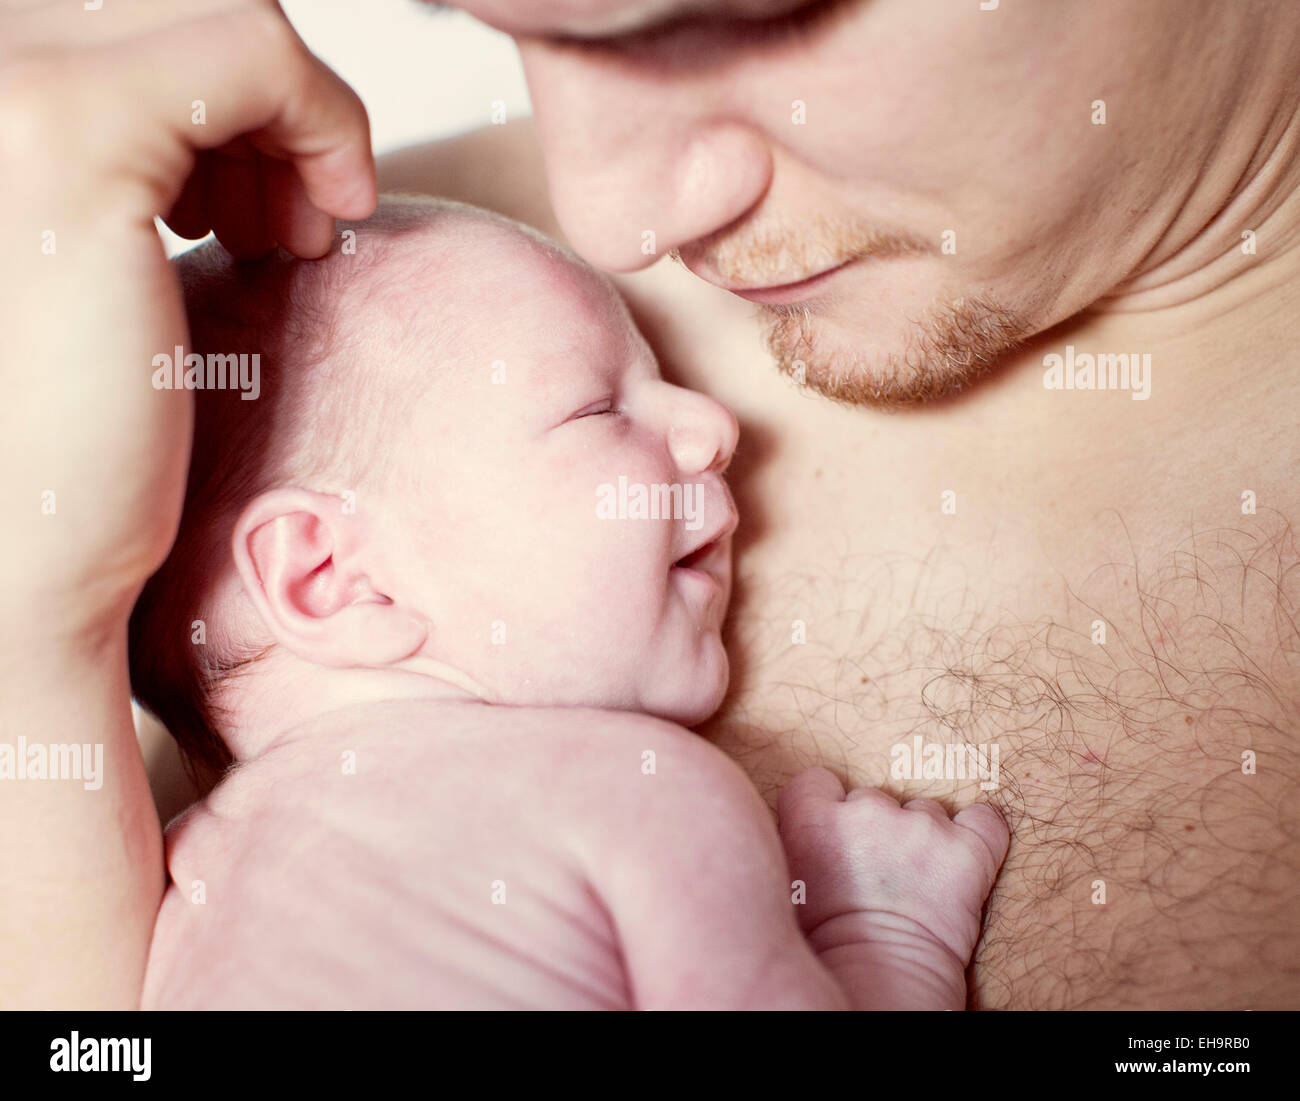 Father comforting newborn baby, close-up Stock Photo